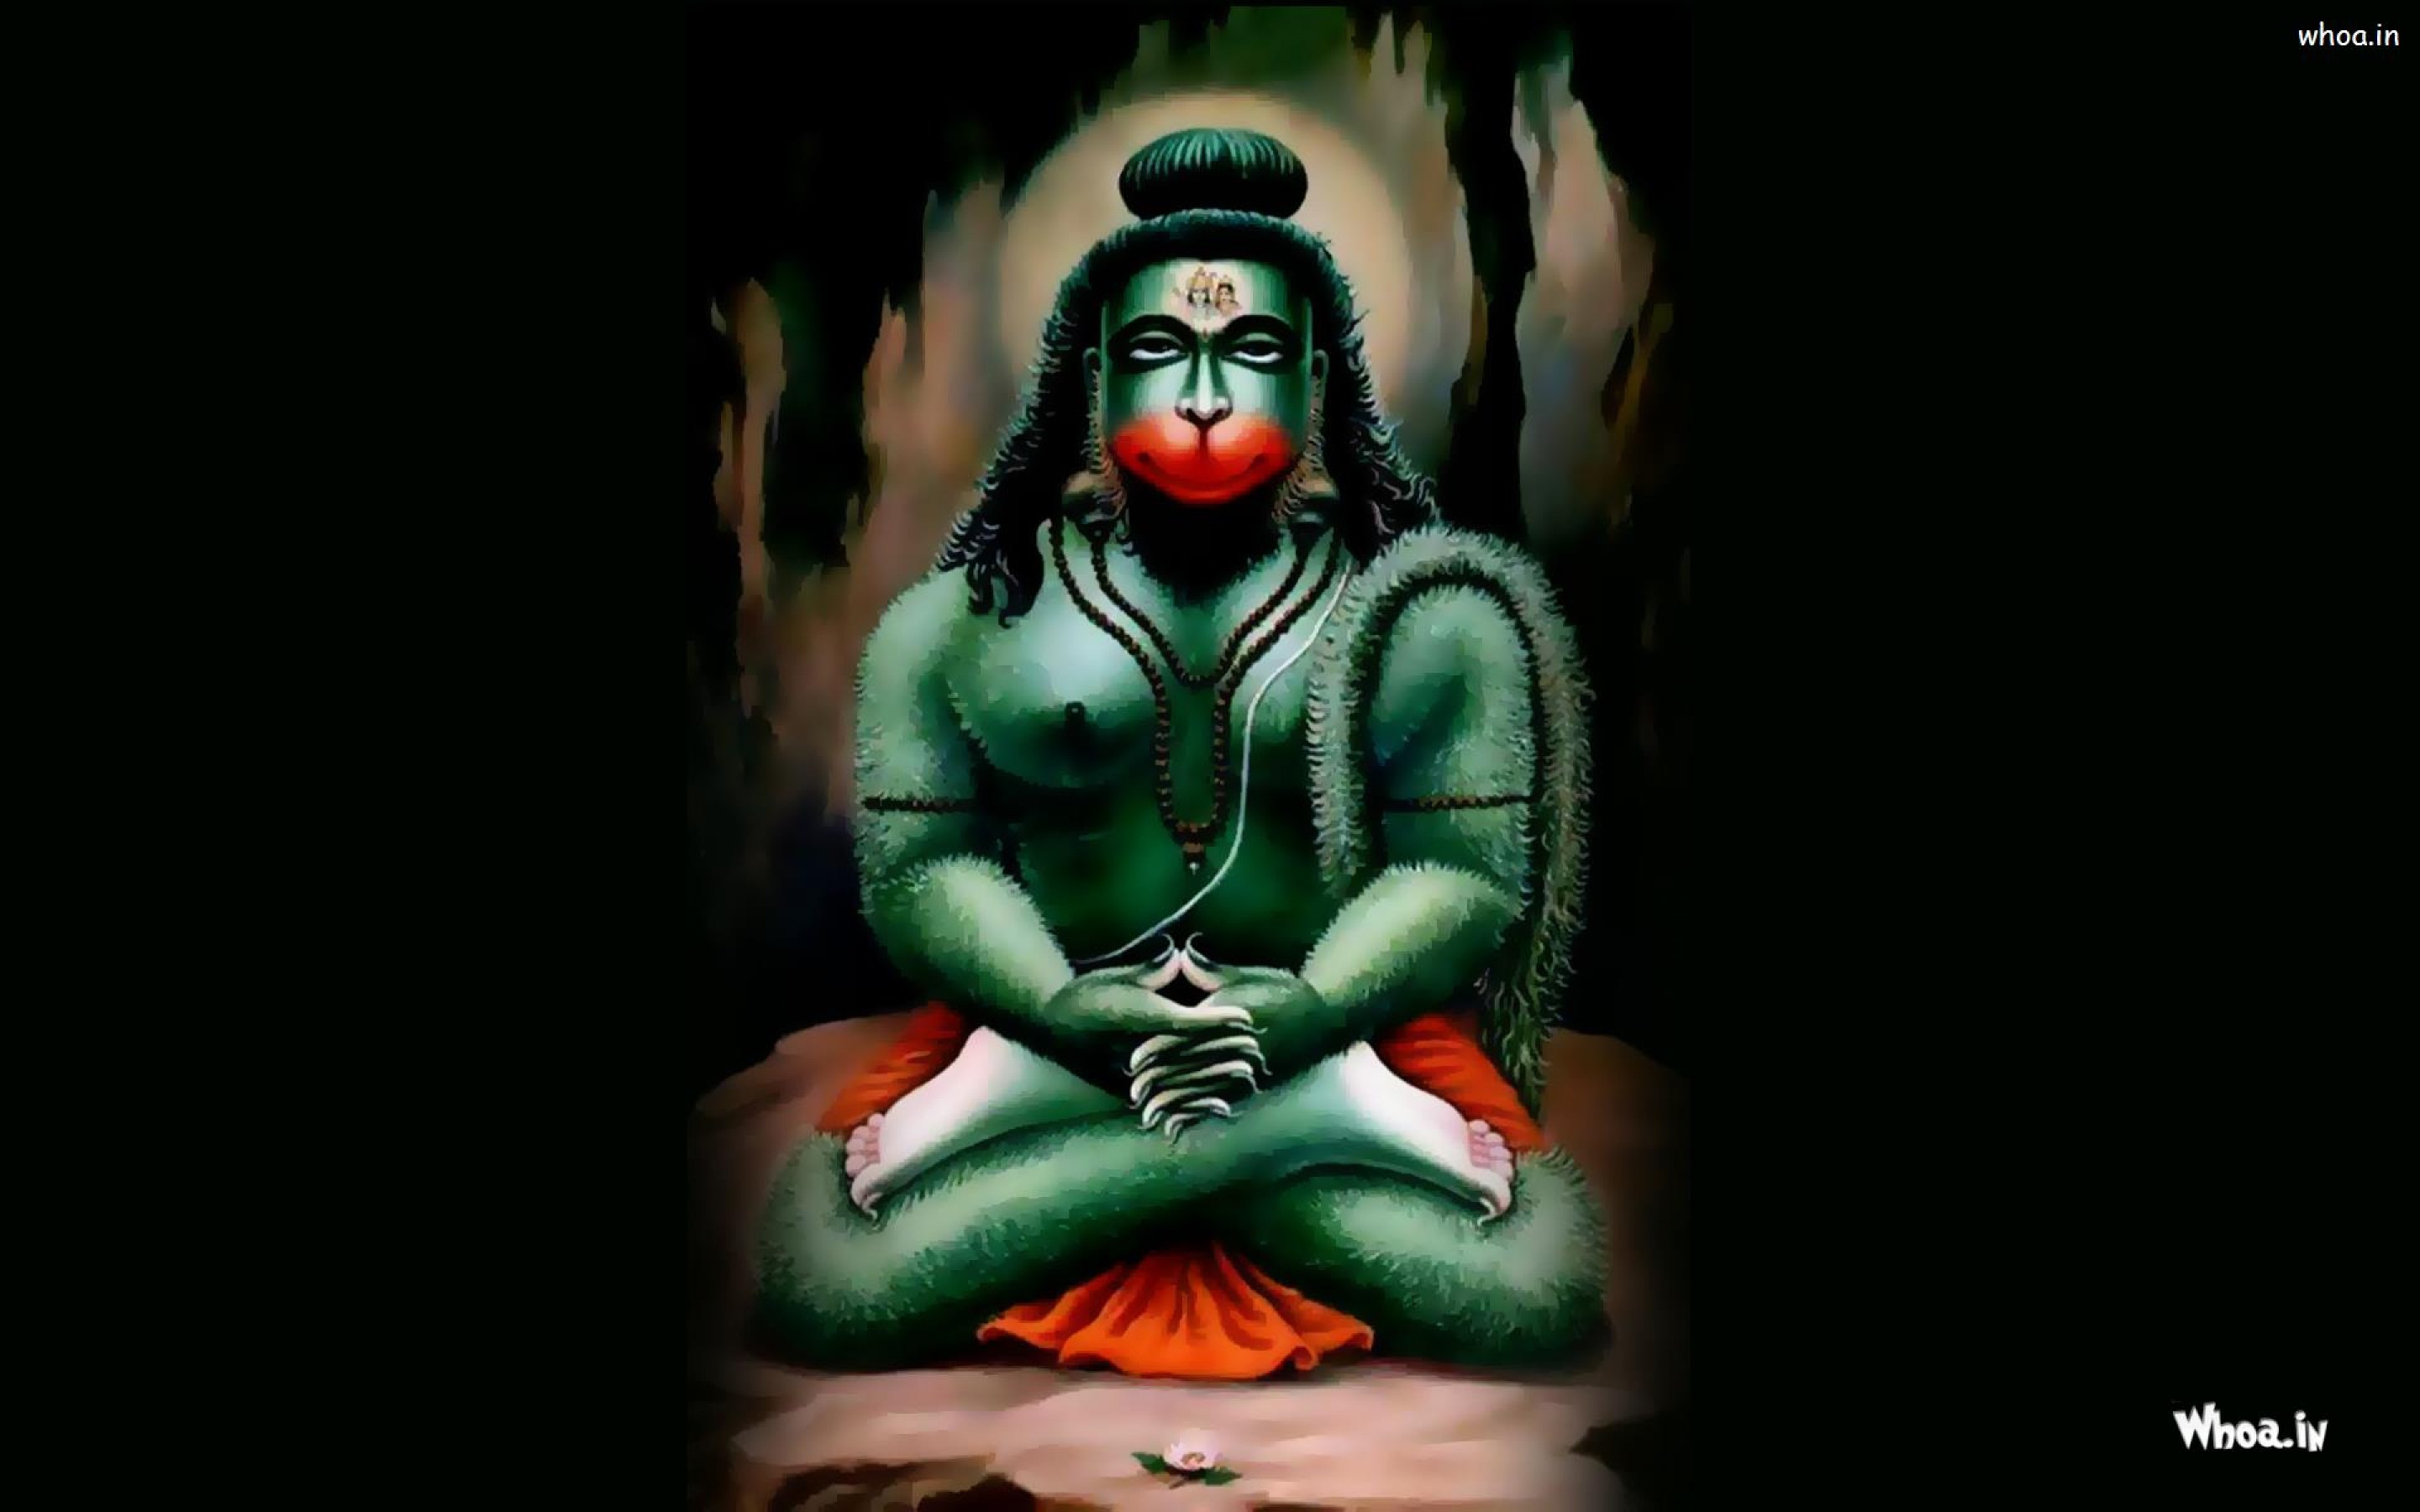 Download wallpaper for 240x320 resolution | Lord Hanuman | other | Wallpaper  Better